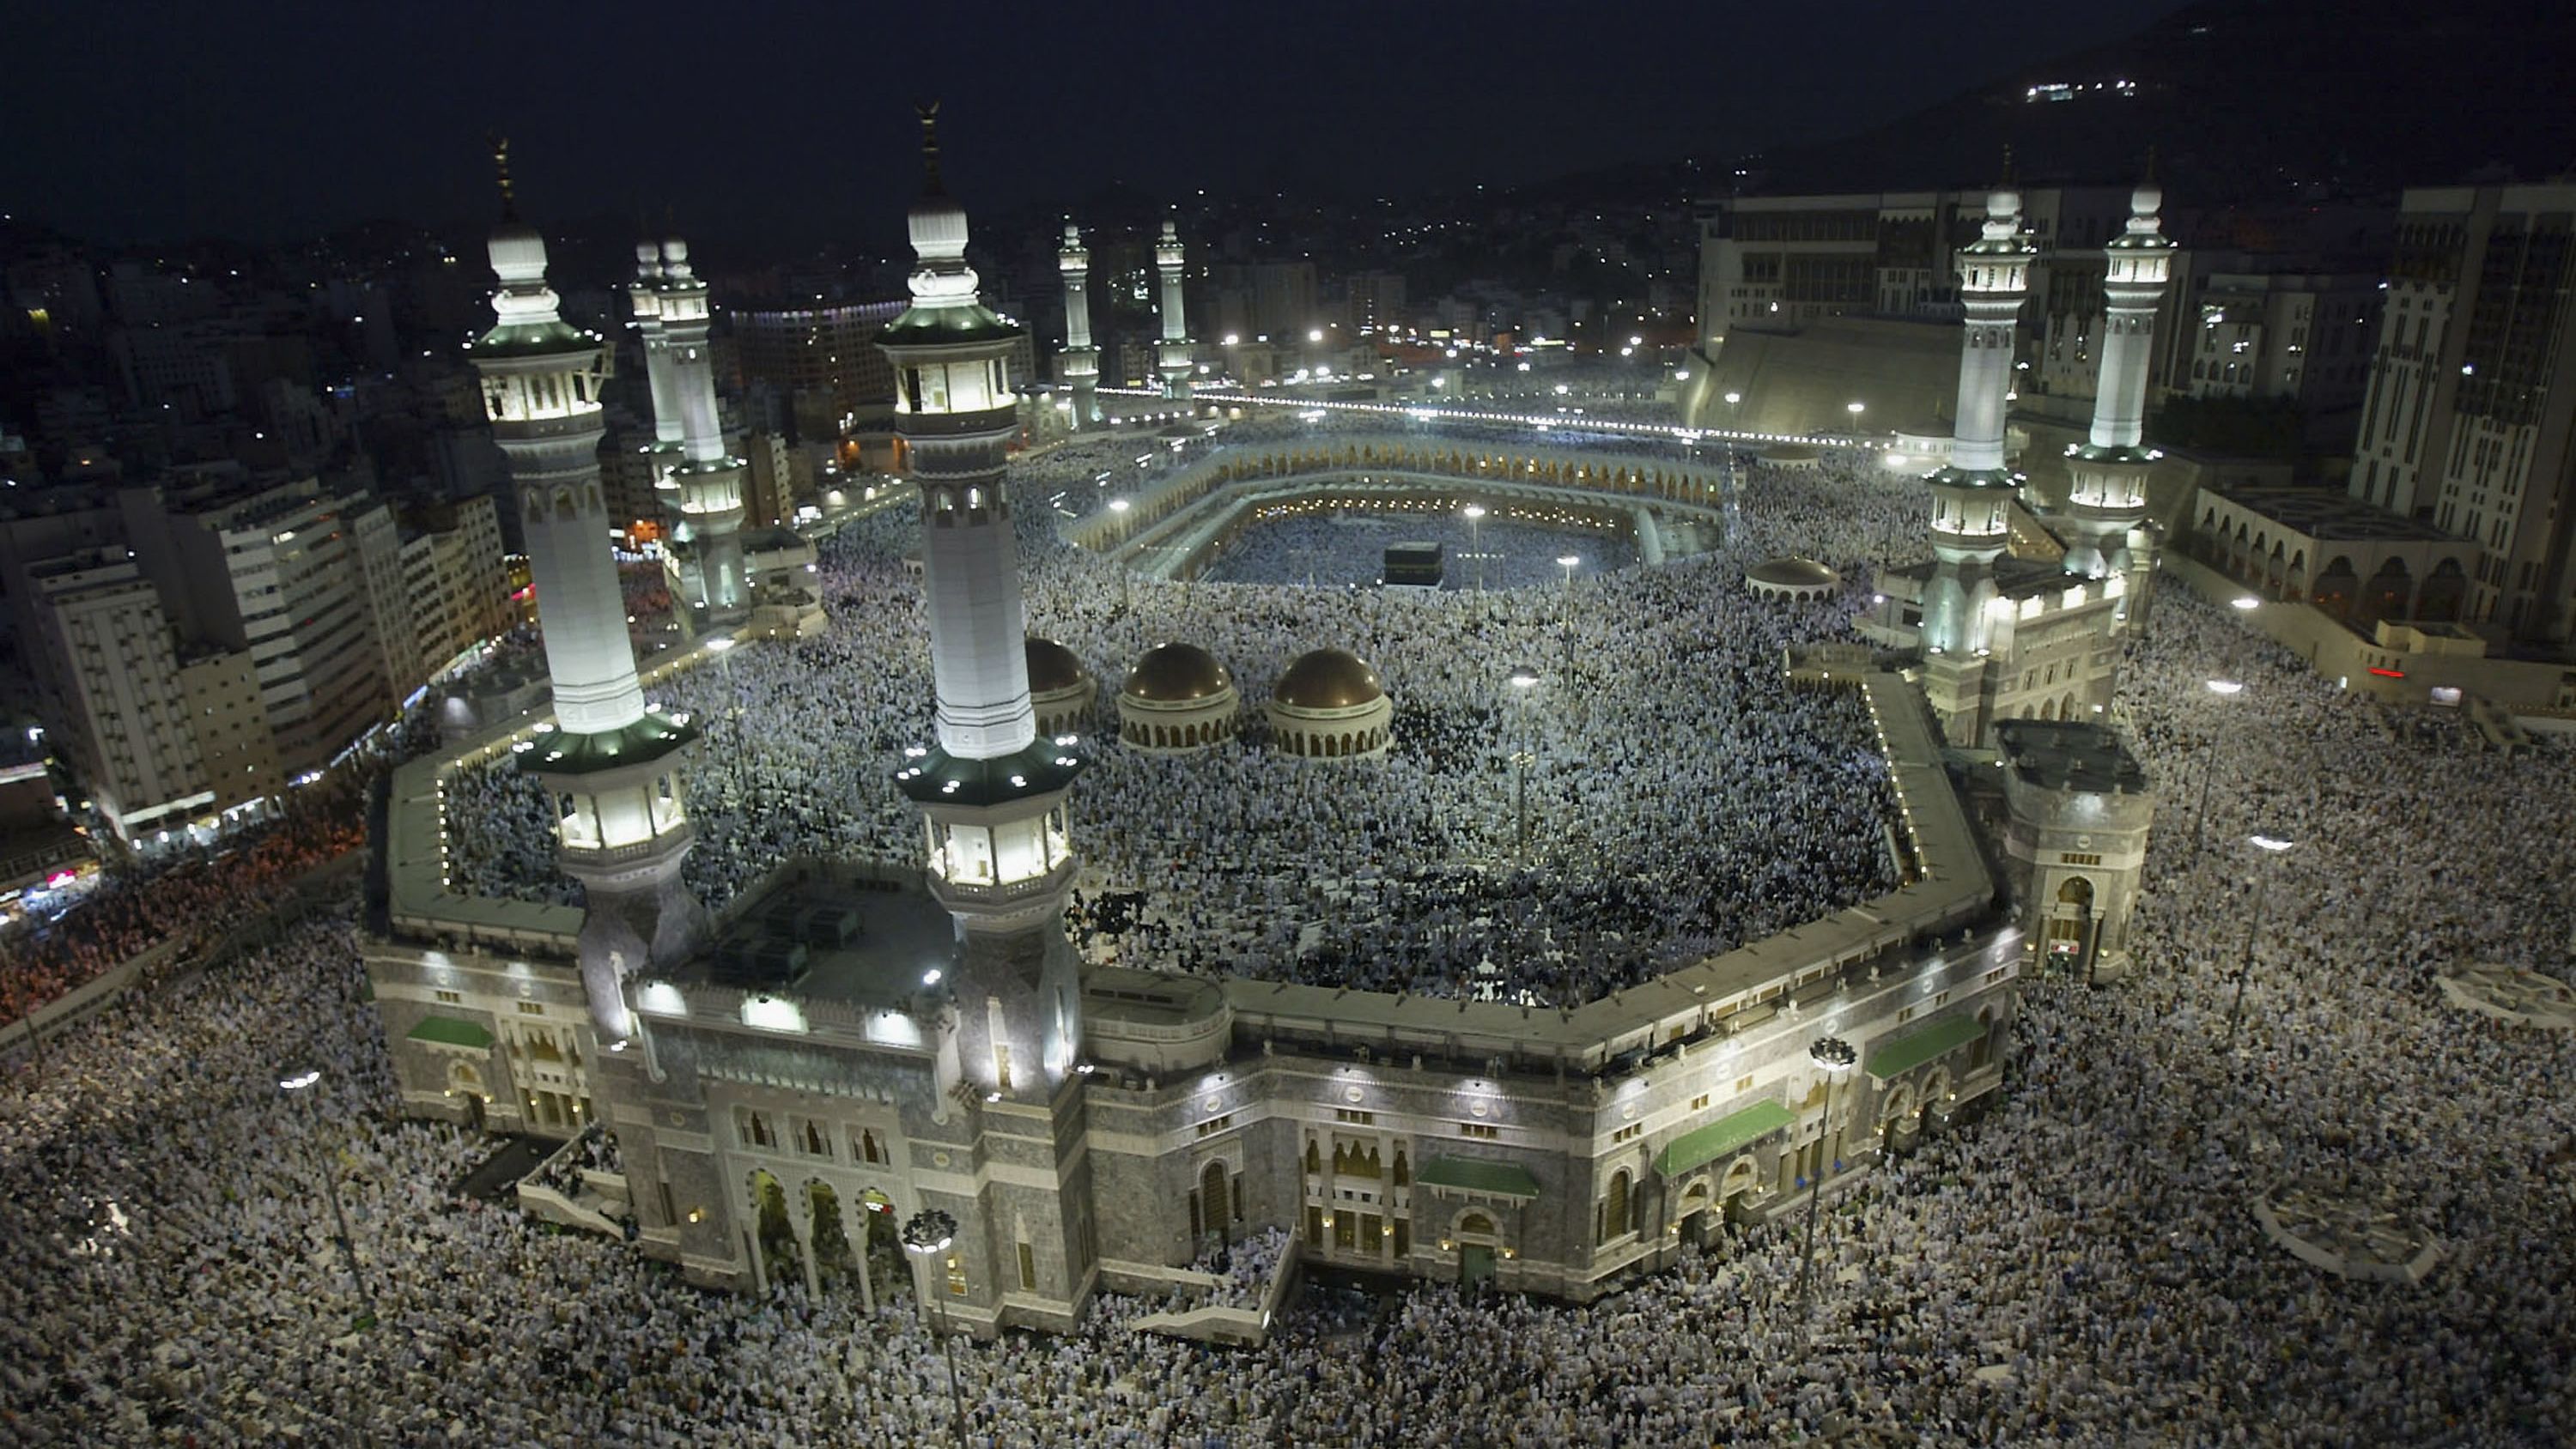 Muslim pilgrims attend the evening prayers inside the Grand Mosque in Mecca